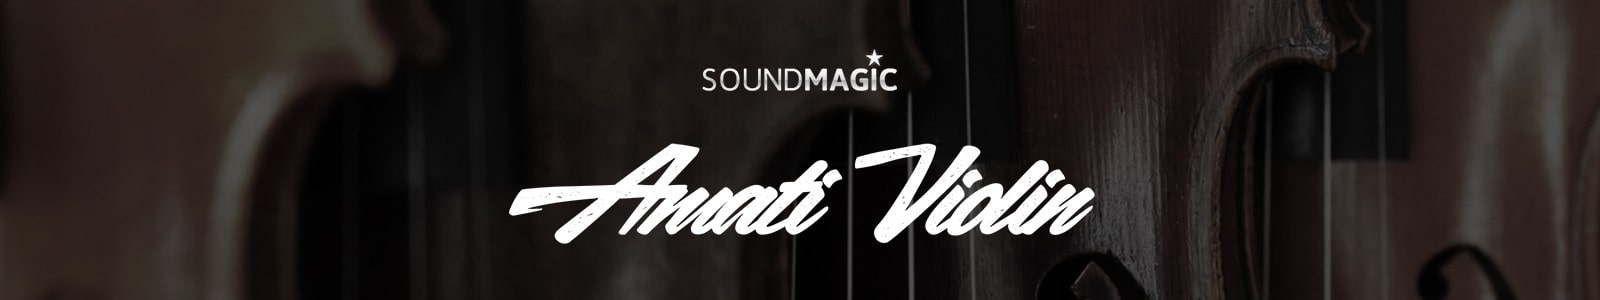 SoundMagic Amati Violin